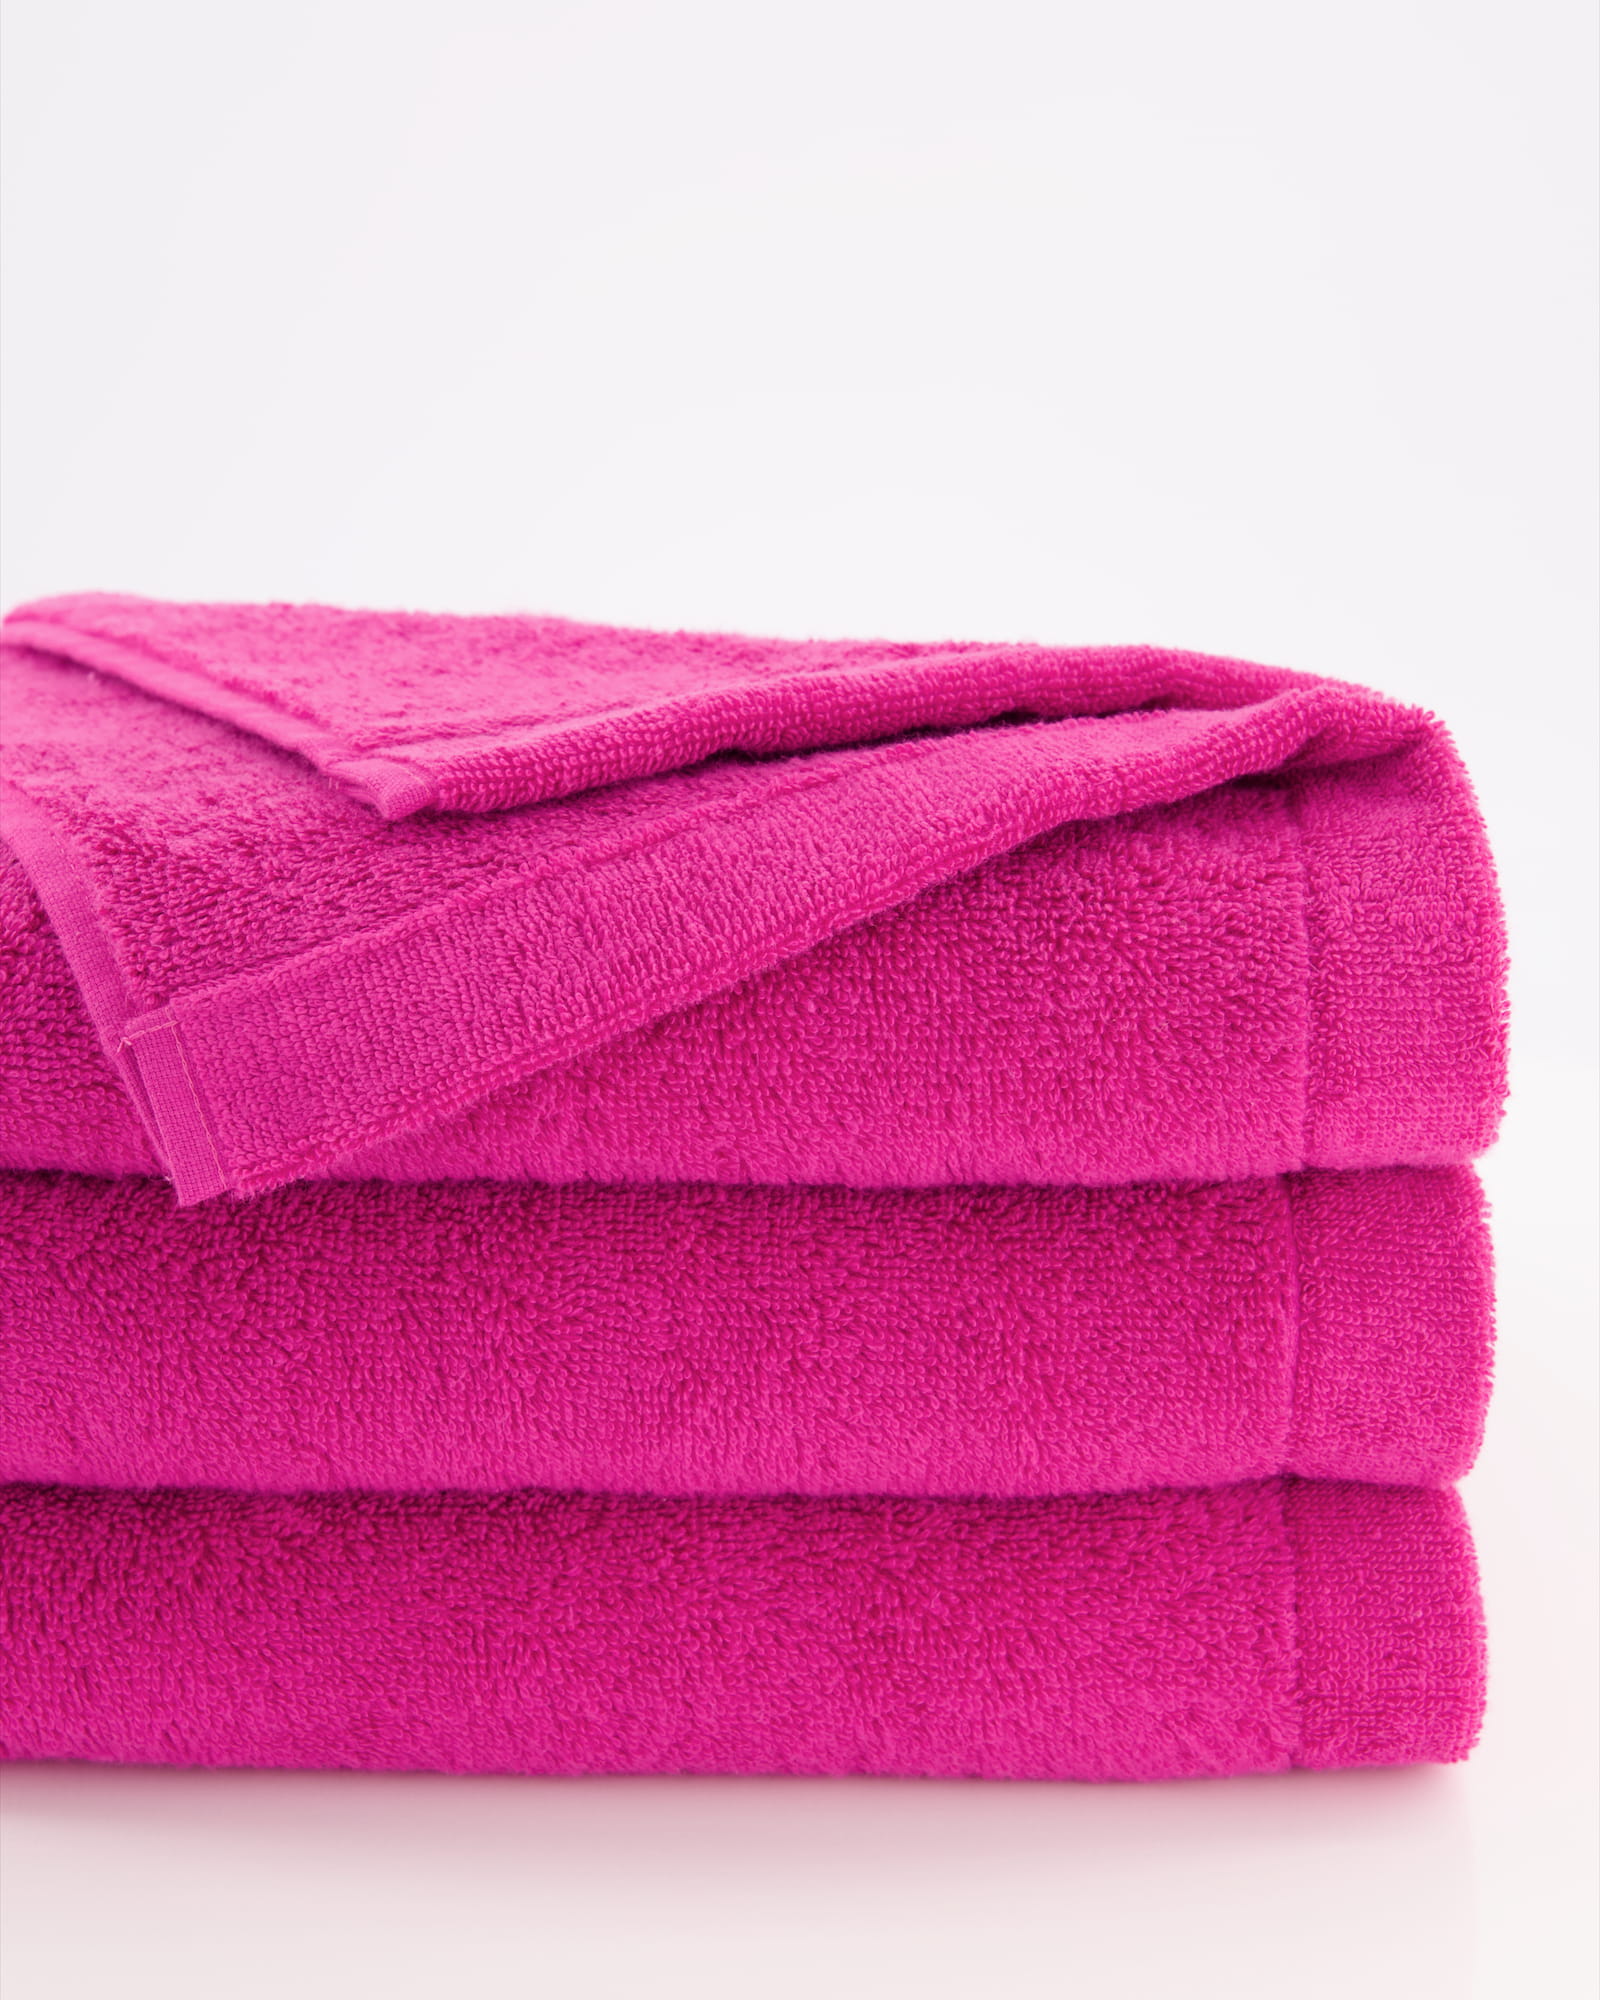 Cawö - Life Style Uni Alle | 7007 | pink Lifestyle | - 247 - Cawö Handtücher Farbe: | Serien